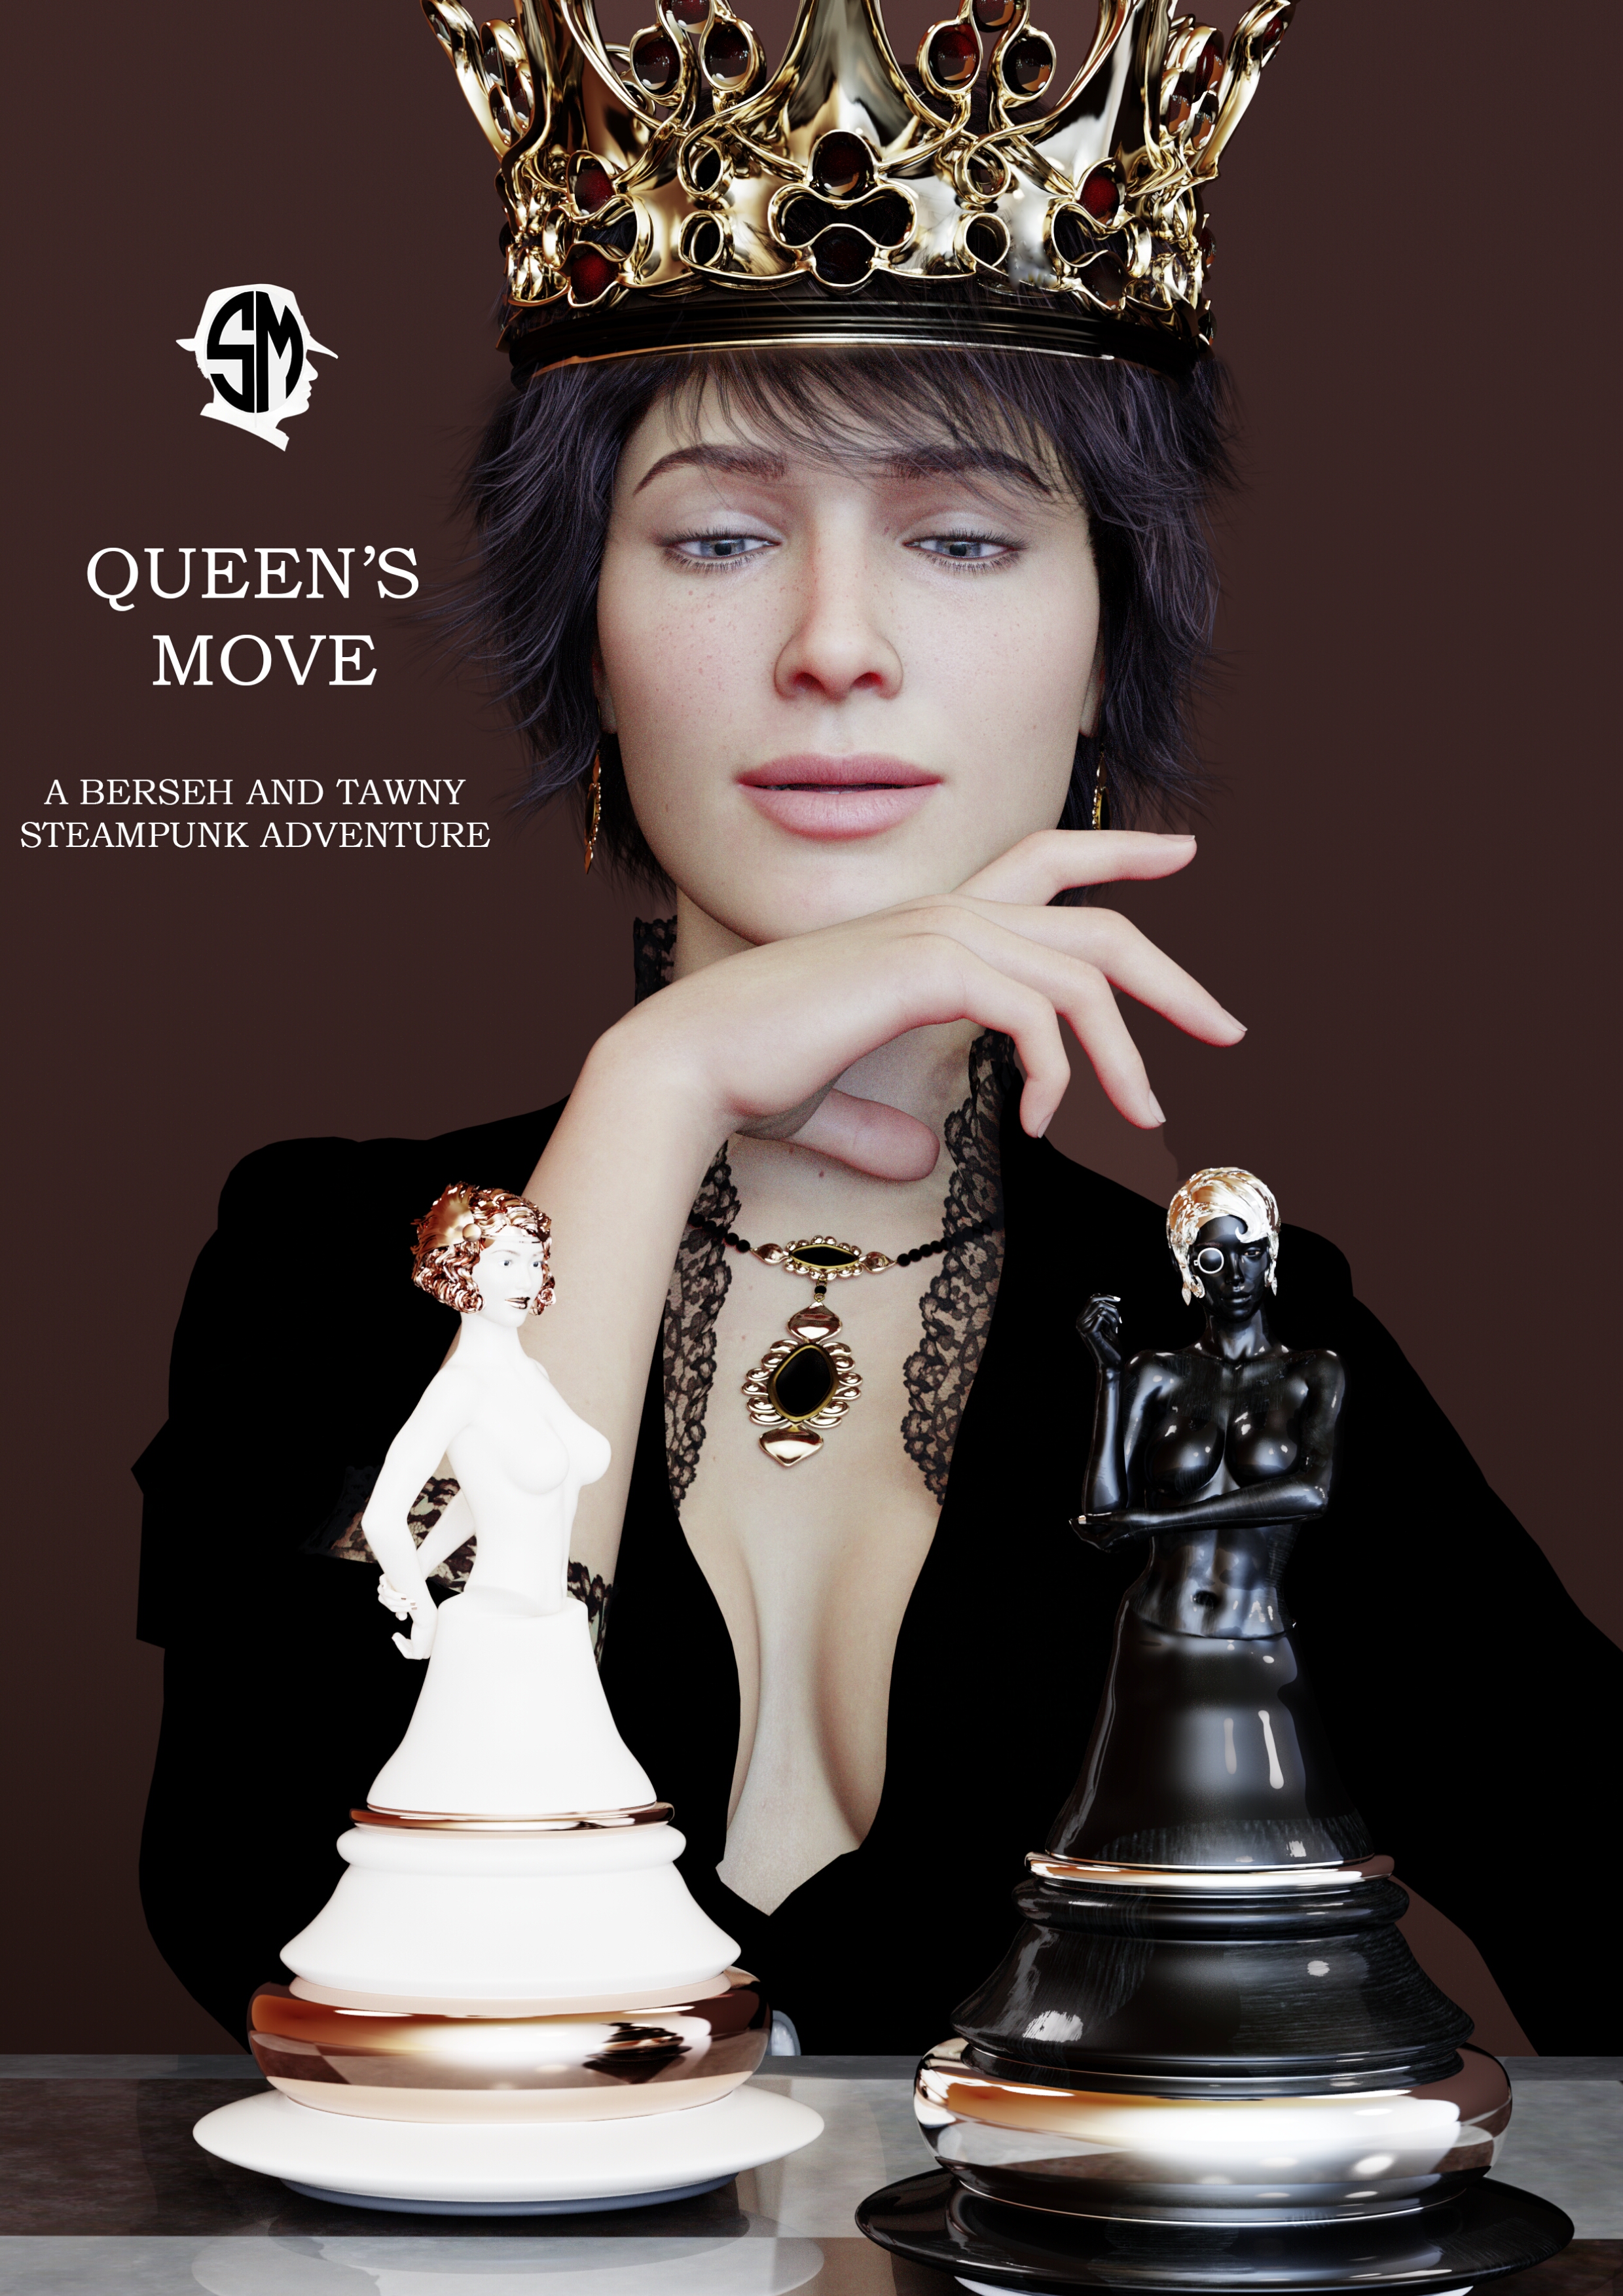 Queen's Move - Cover Art